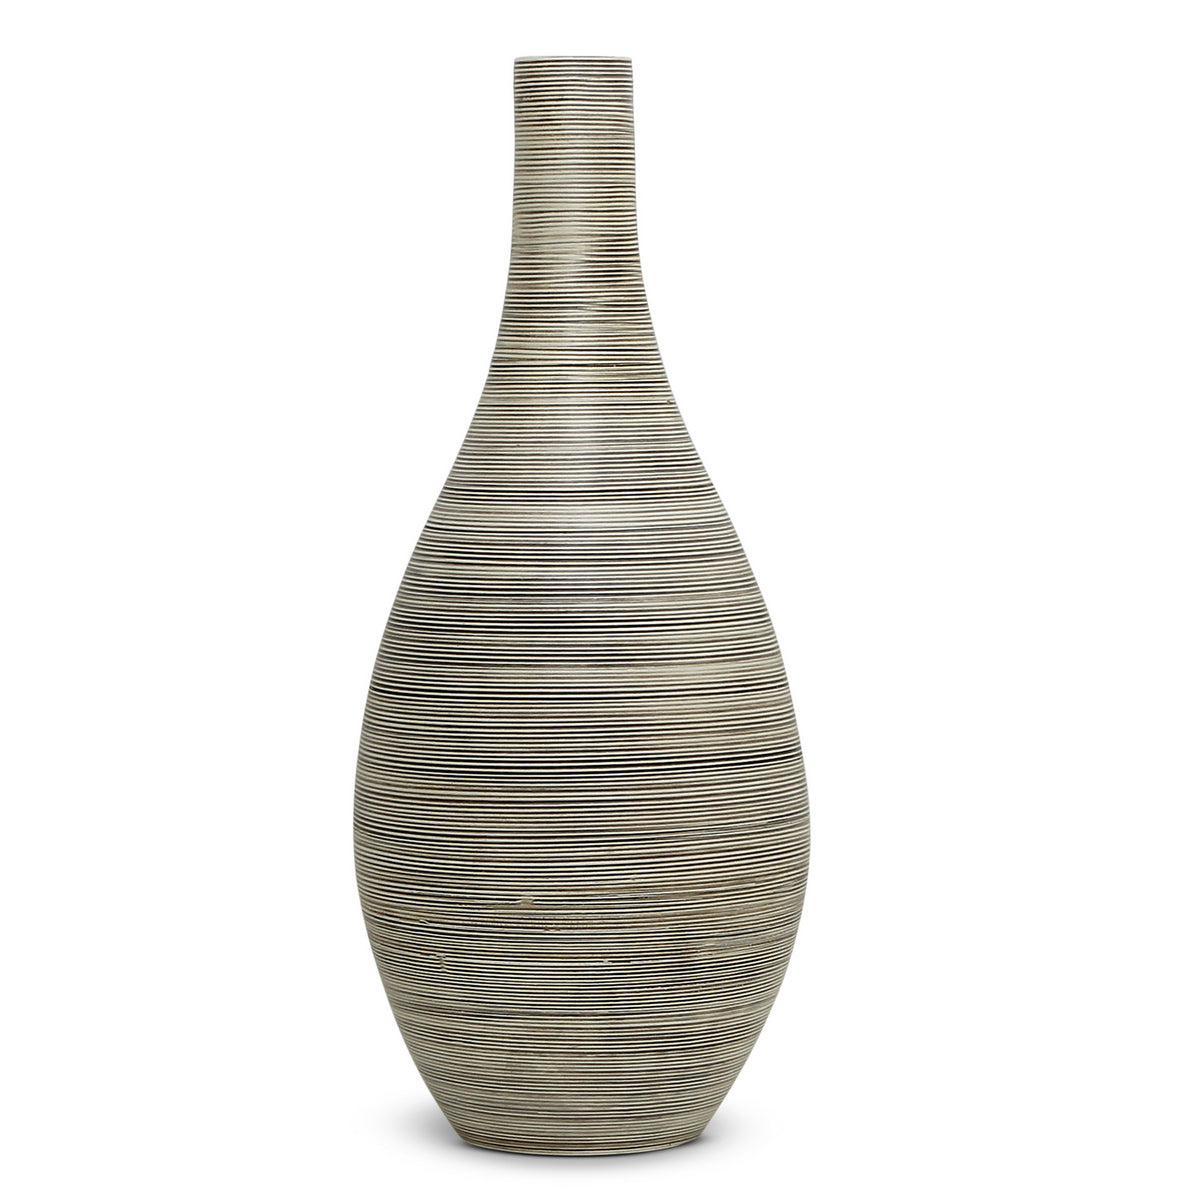 SABBIA TOSCANA: Very Tall Shaped Narrow Neck Vase - Artistica.com